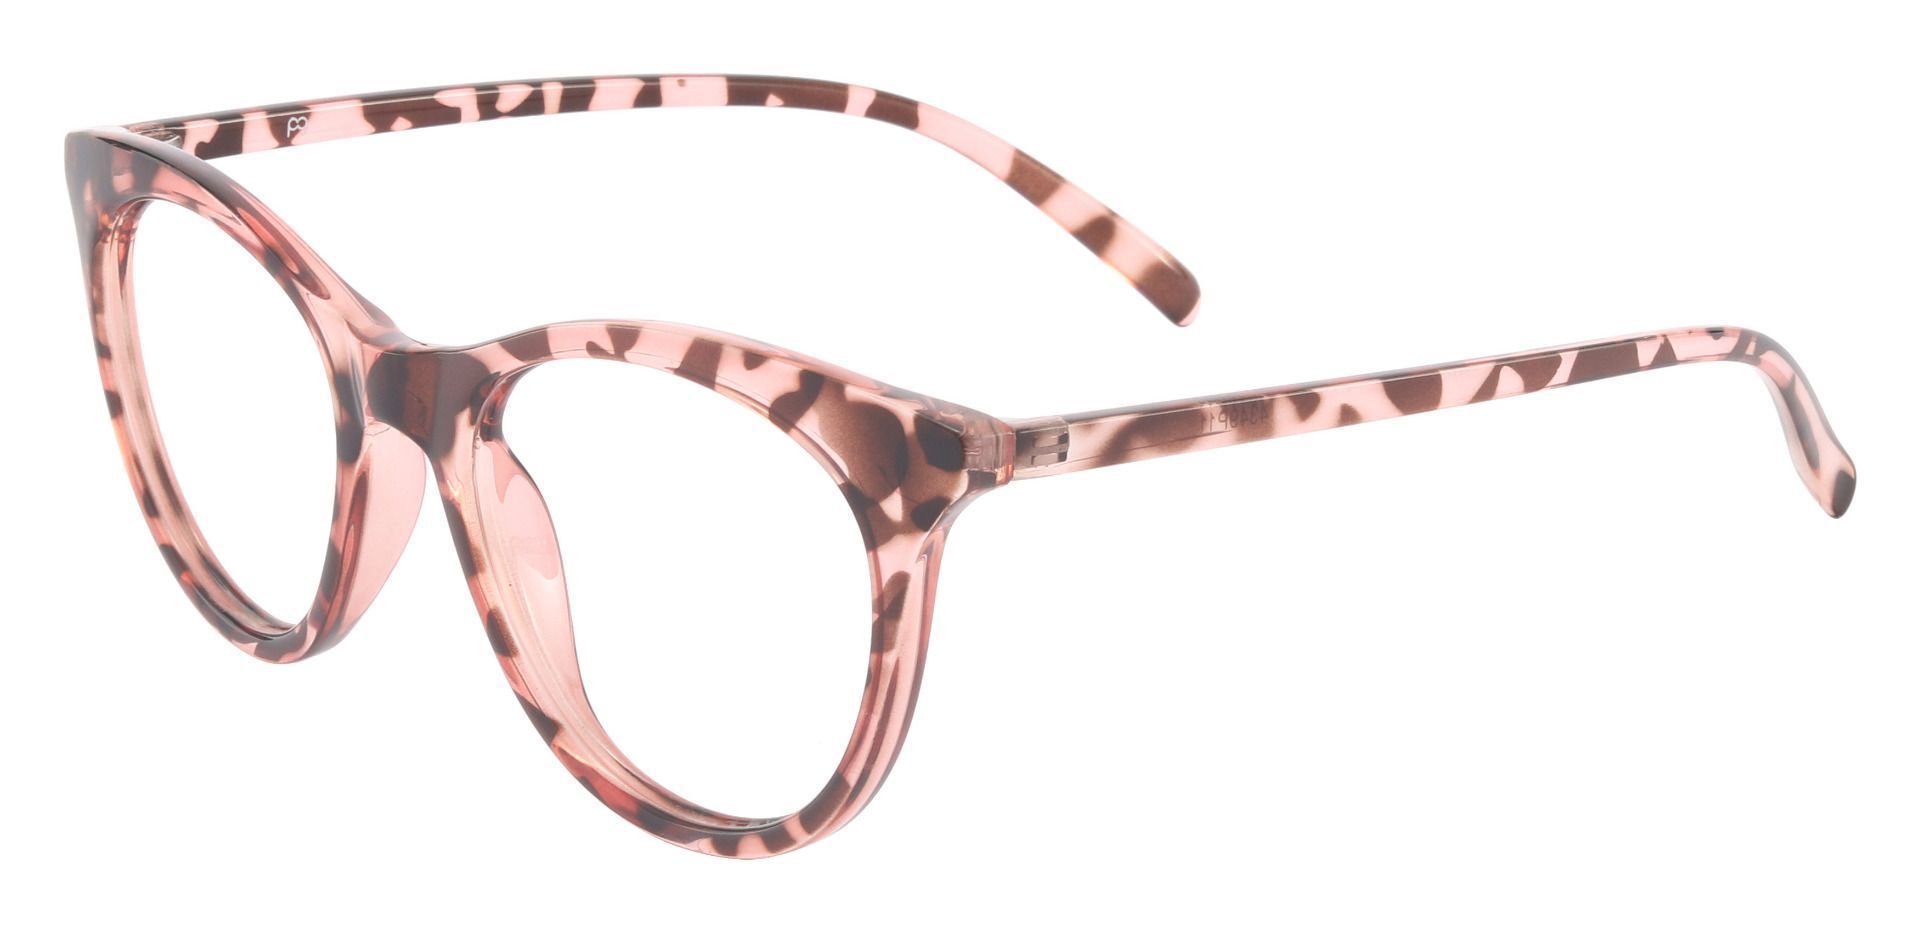 Valencia Cat Eye Prescription Glasses - Pink